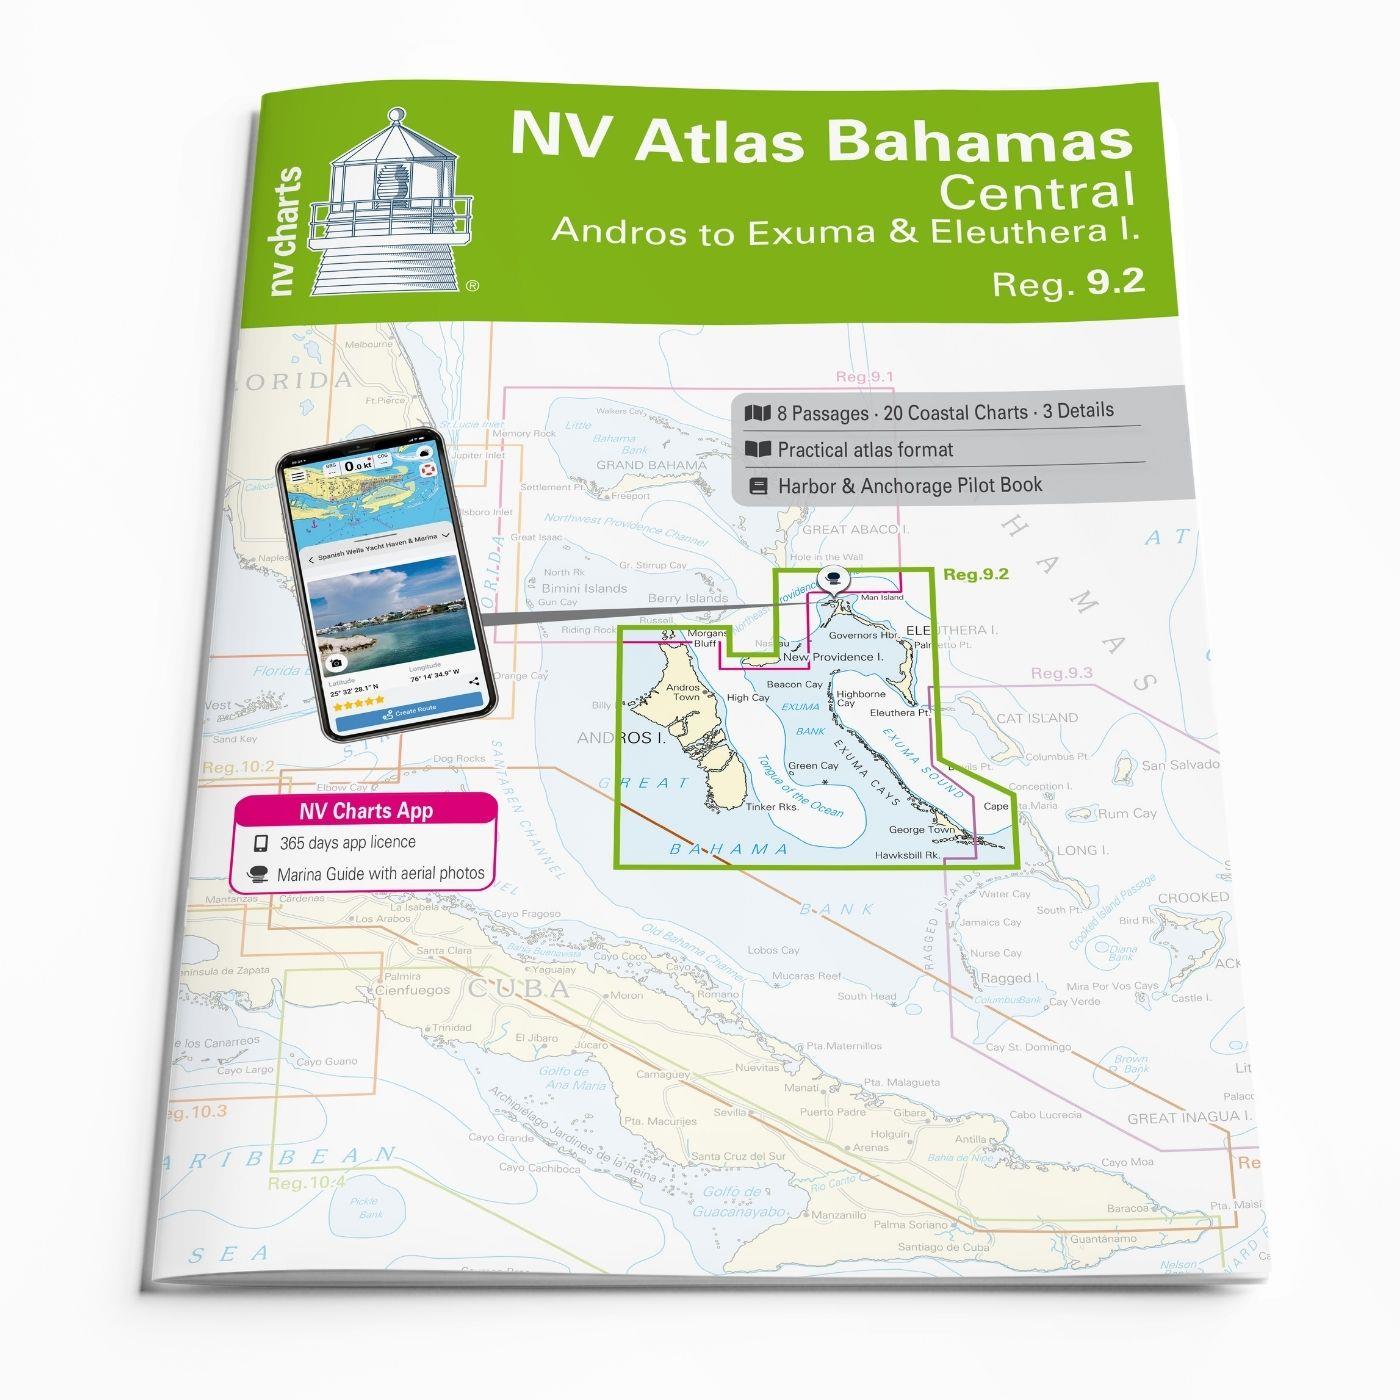 NV Charts Bahamas 9.2 - Central Andros to Exumas & Eleuthera Islands